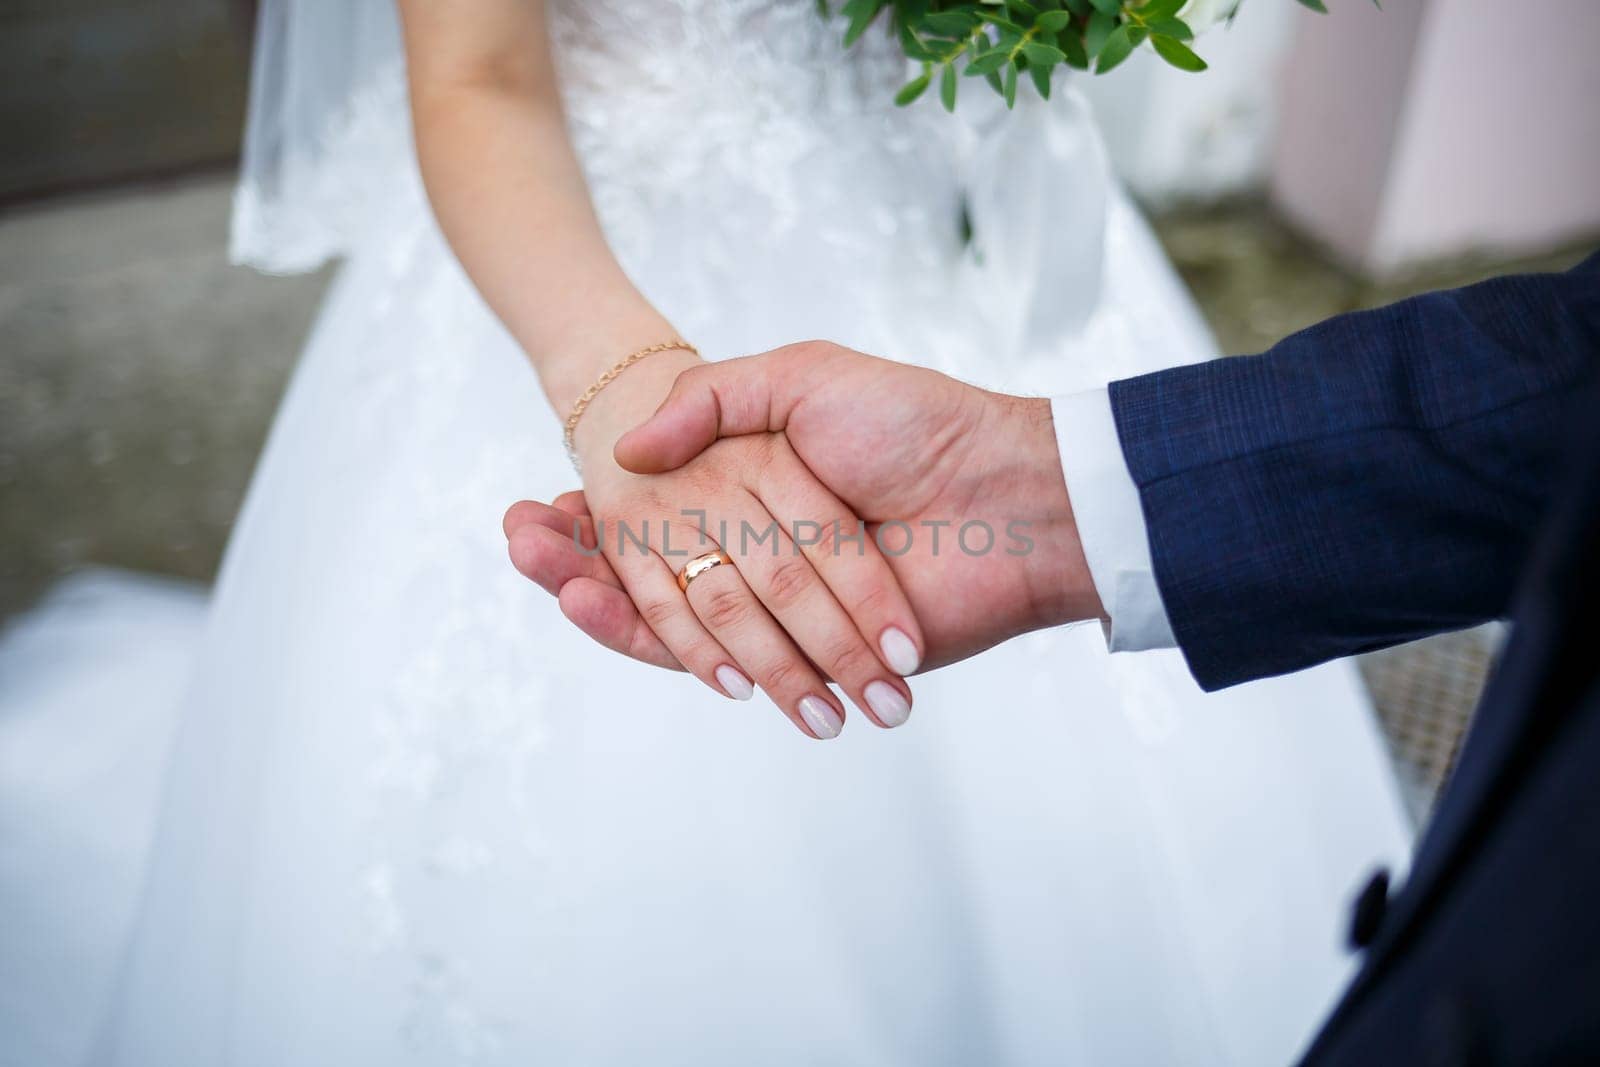 Newlyweds on wedding day, wedding couple holding hands, bride and groom